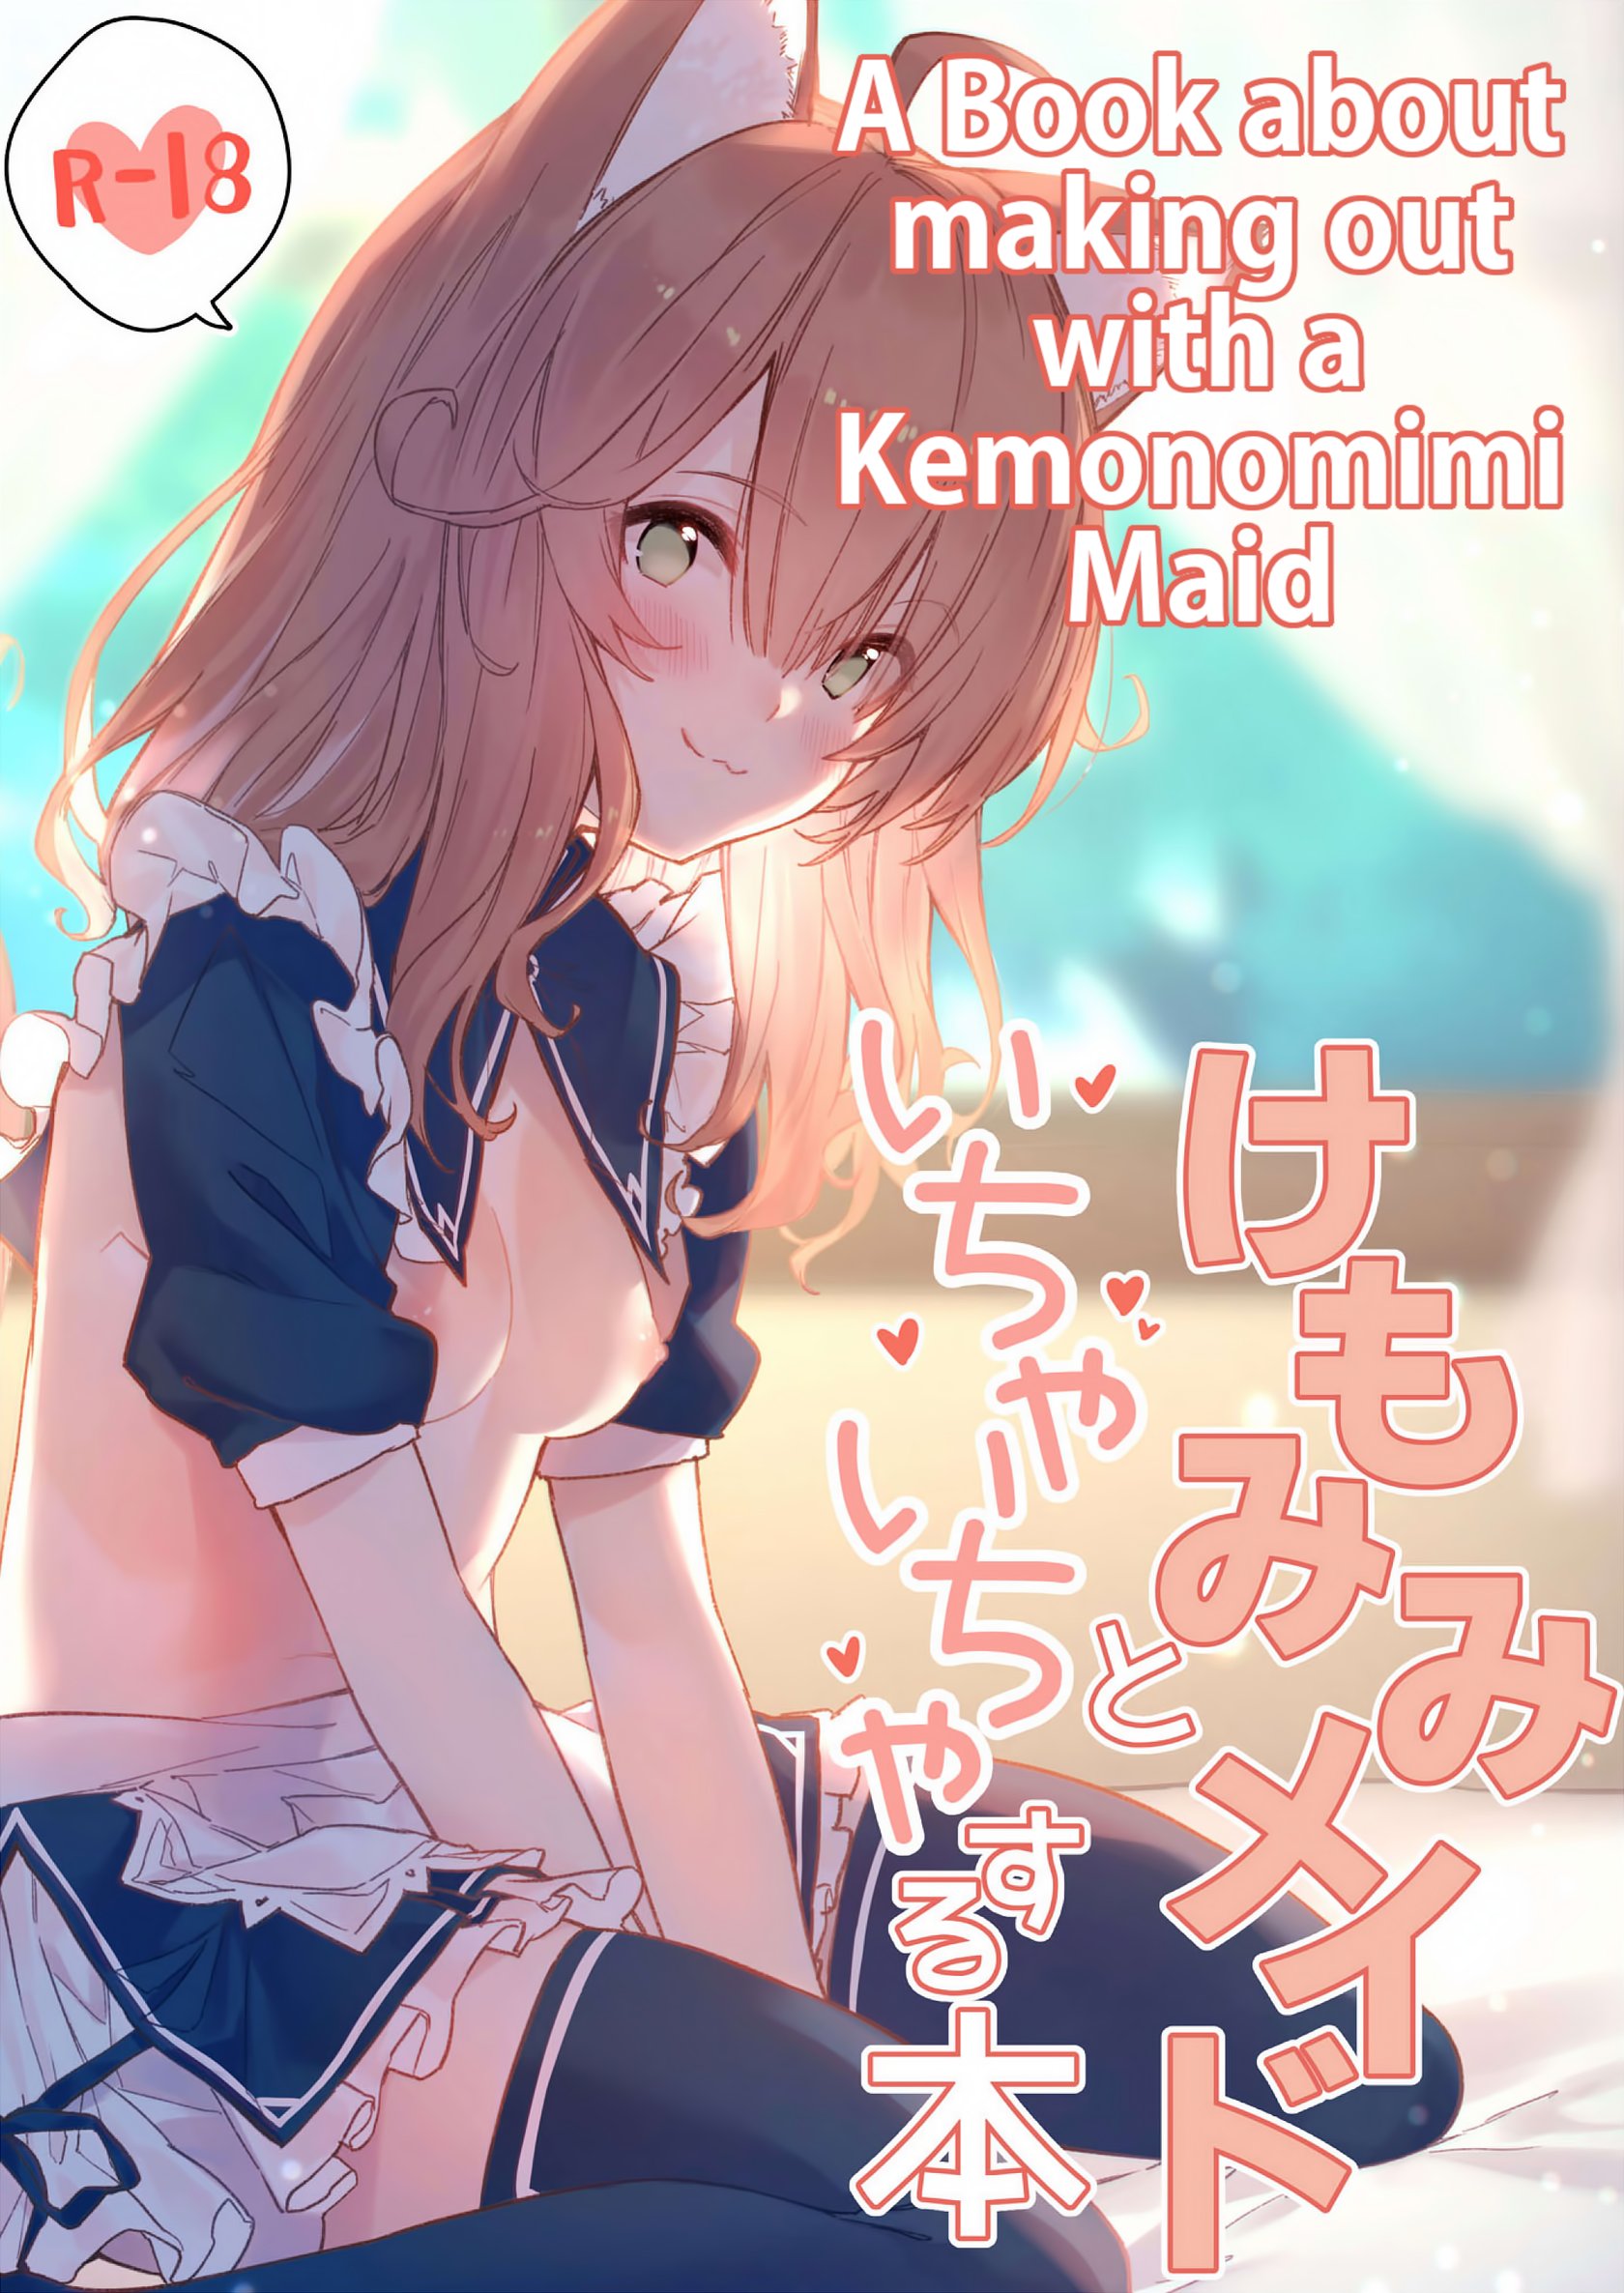 Kemonomimi porn comics